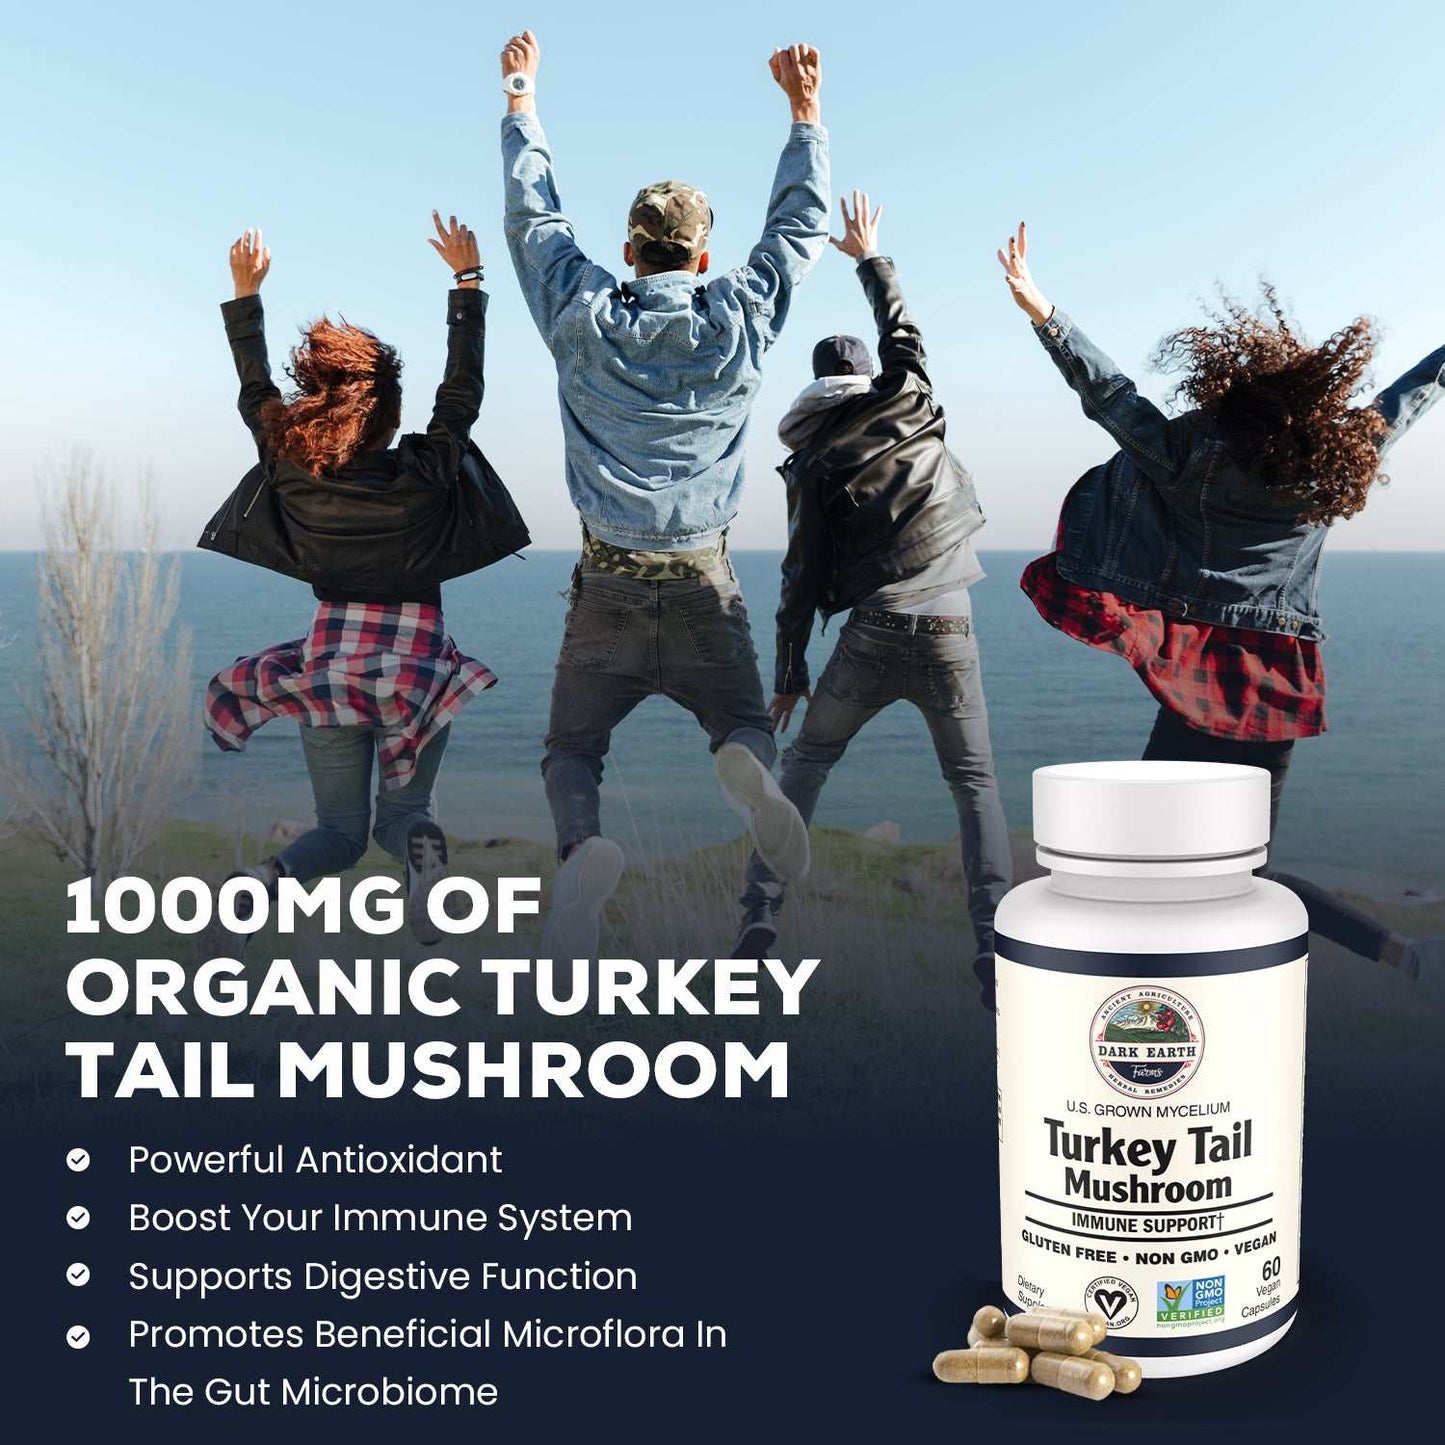 Organic Turkey Tail Mushroom Capsules by dark Earth Farms